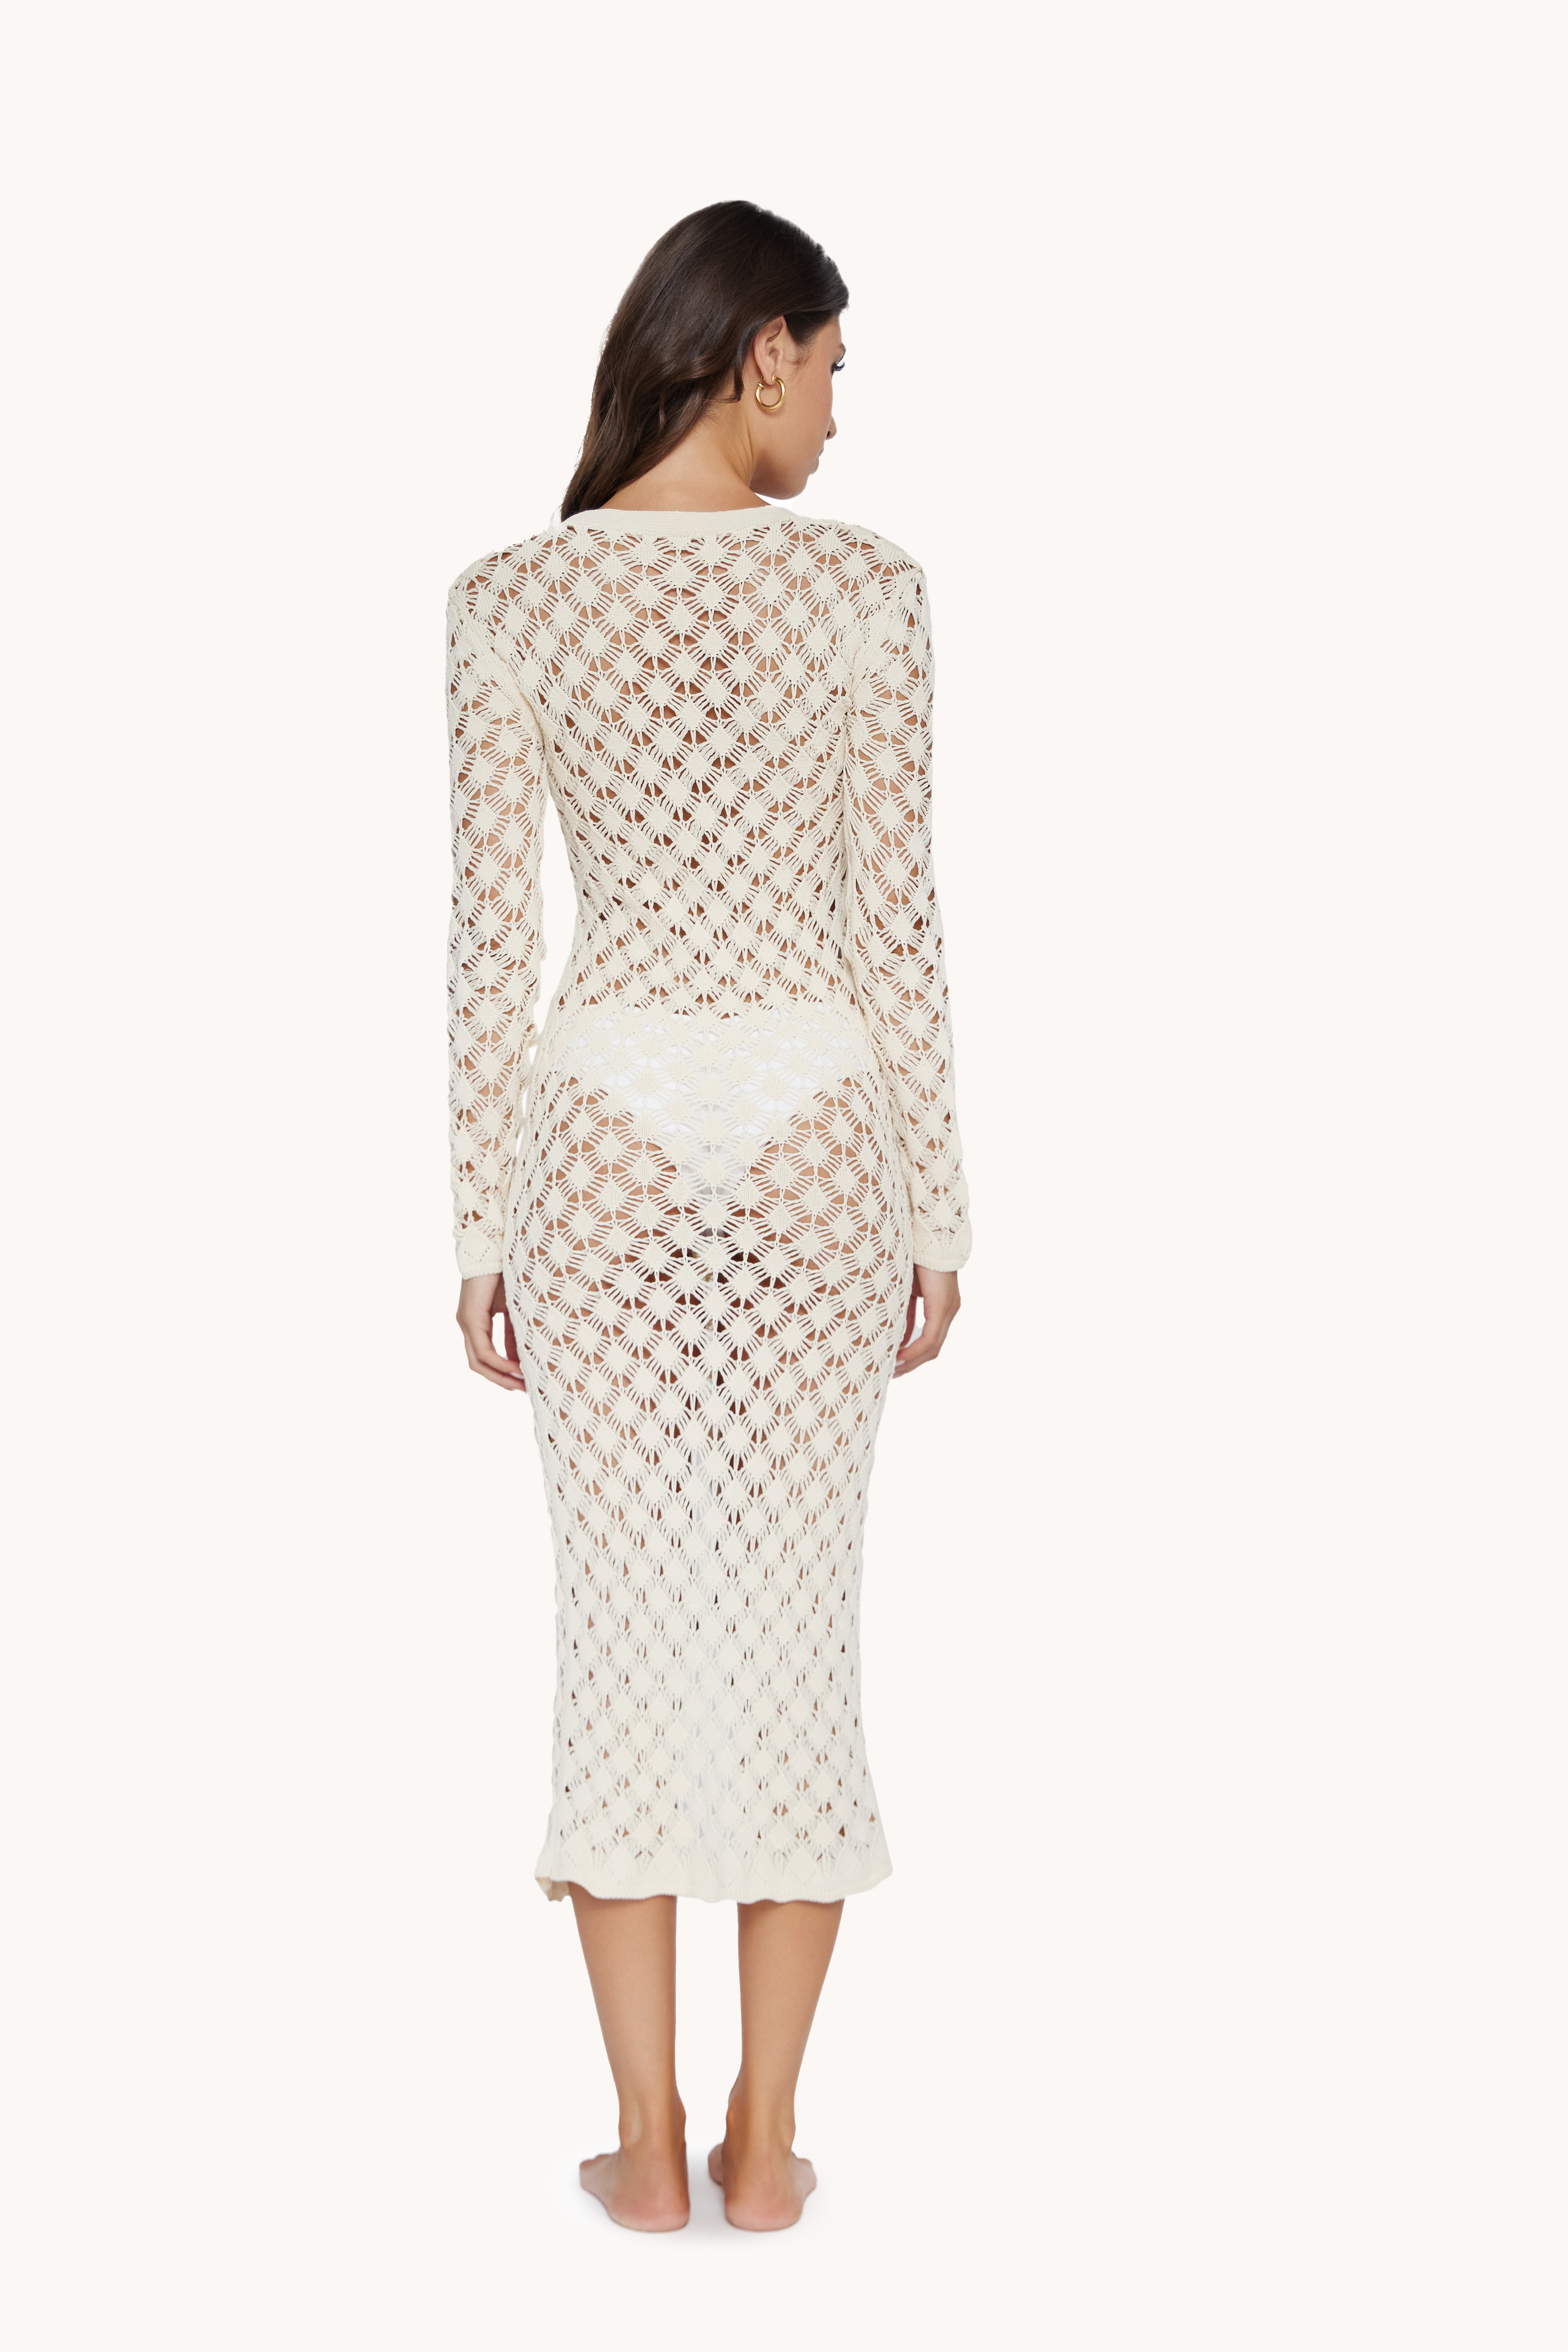 Shop the look: Navy Isla Bikini + Ivory Sweater Dress